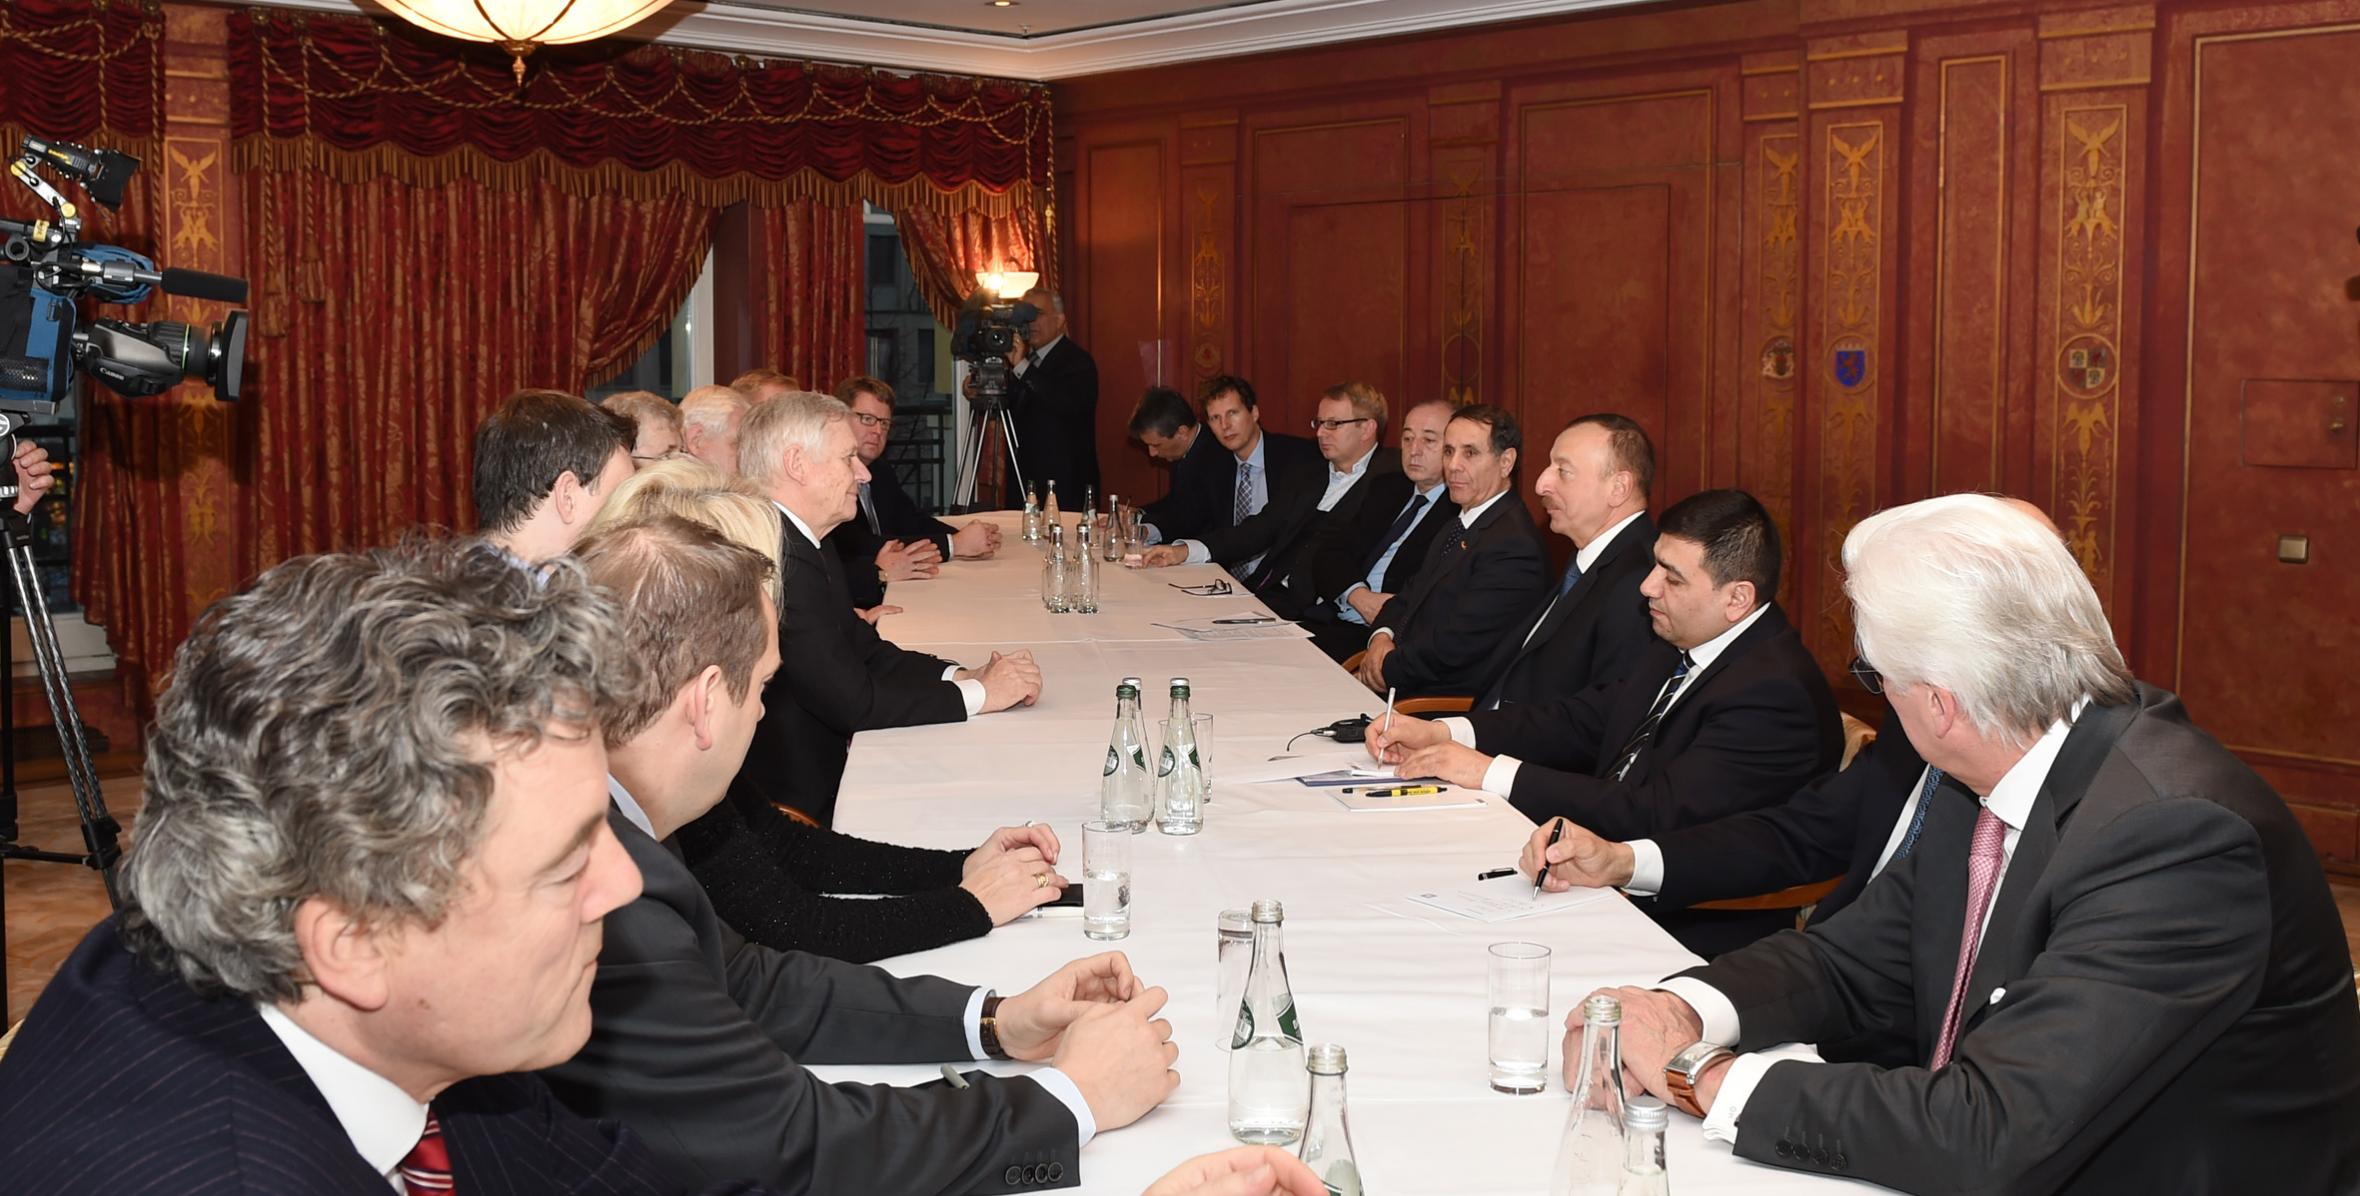 Ilham Aliyev met members of the German-Azerbaijani Forum and Bundestag